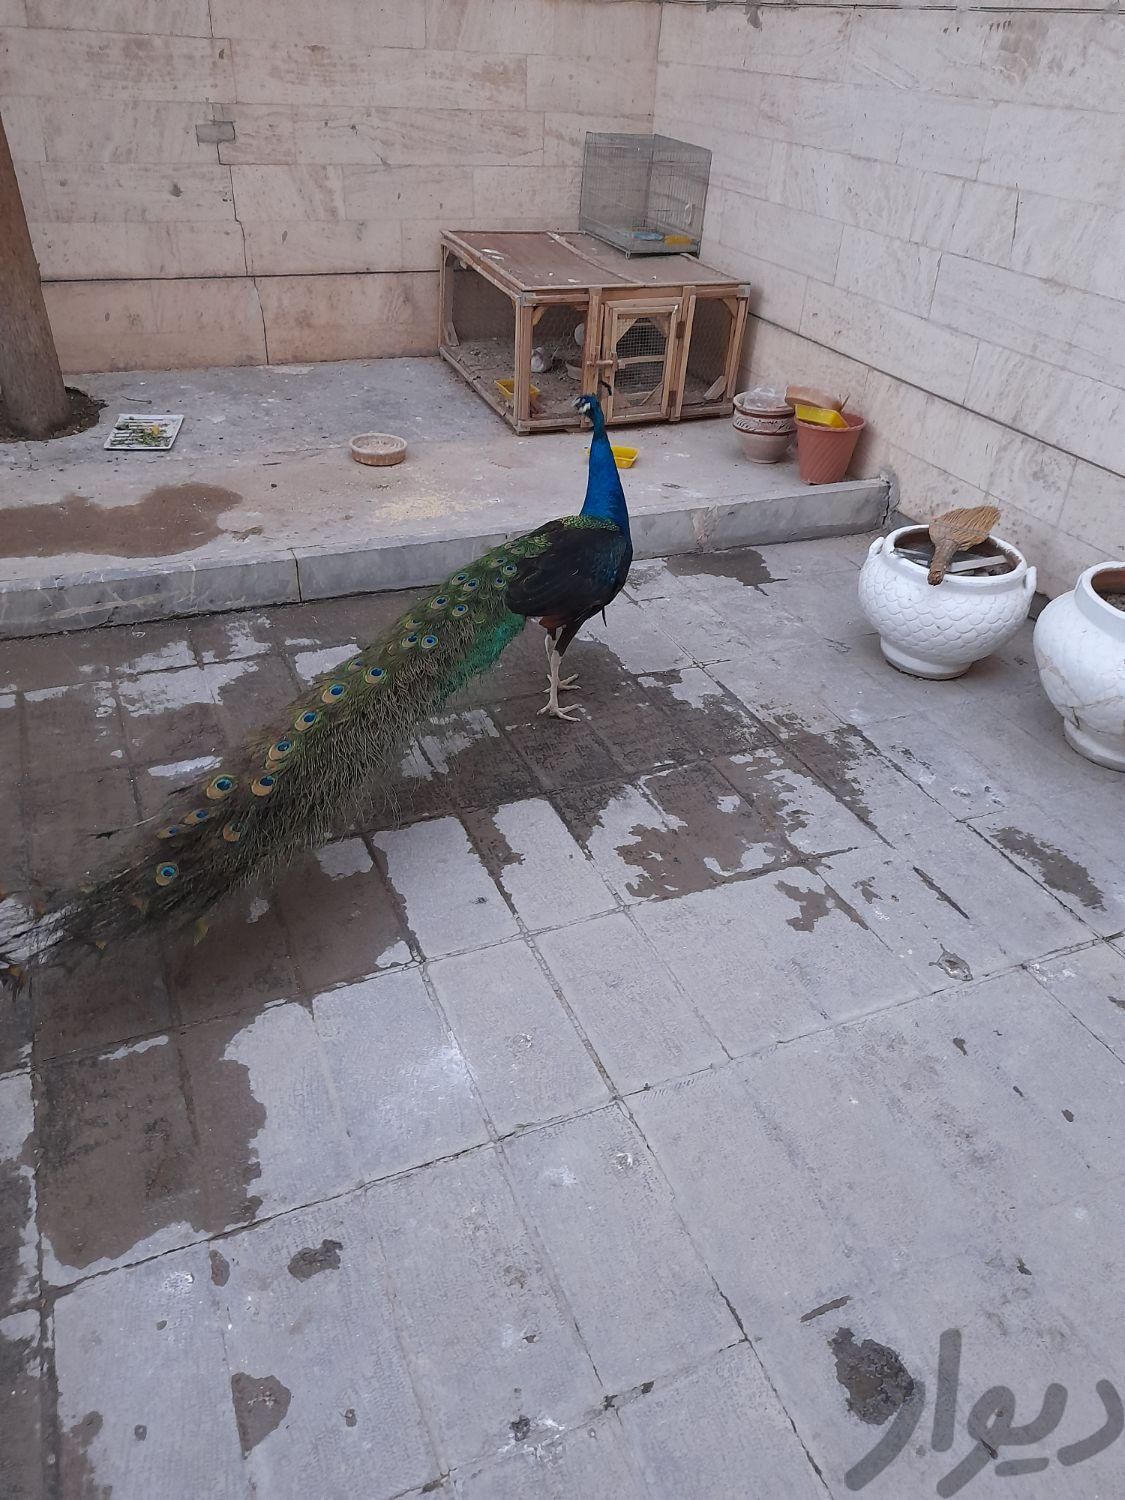 طاووس|پرنده|اصفهان, ناژوان|دیوار